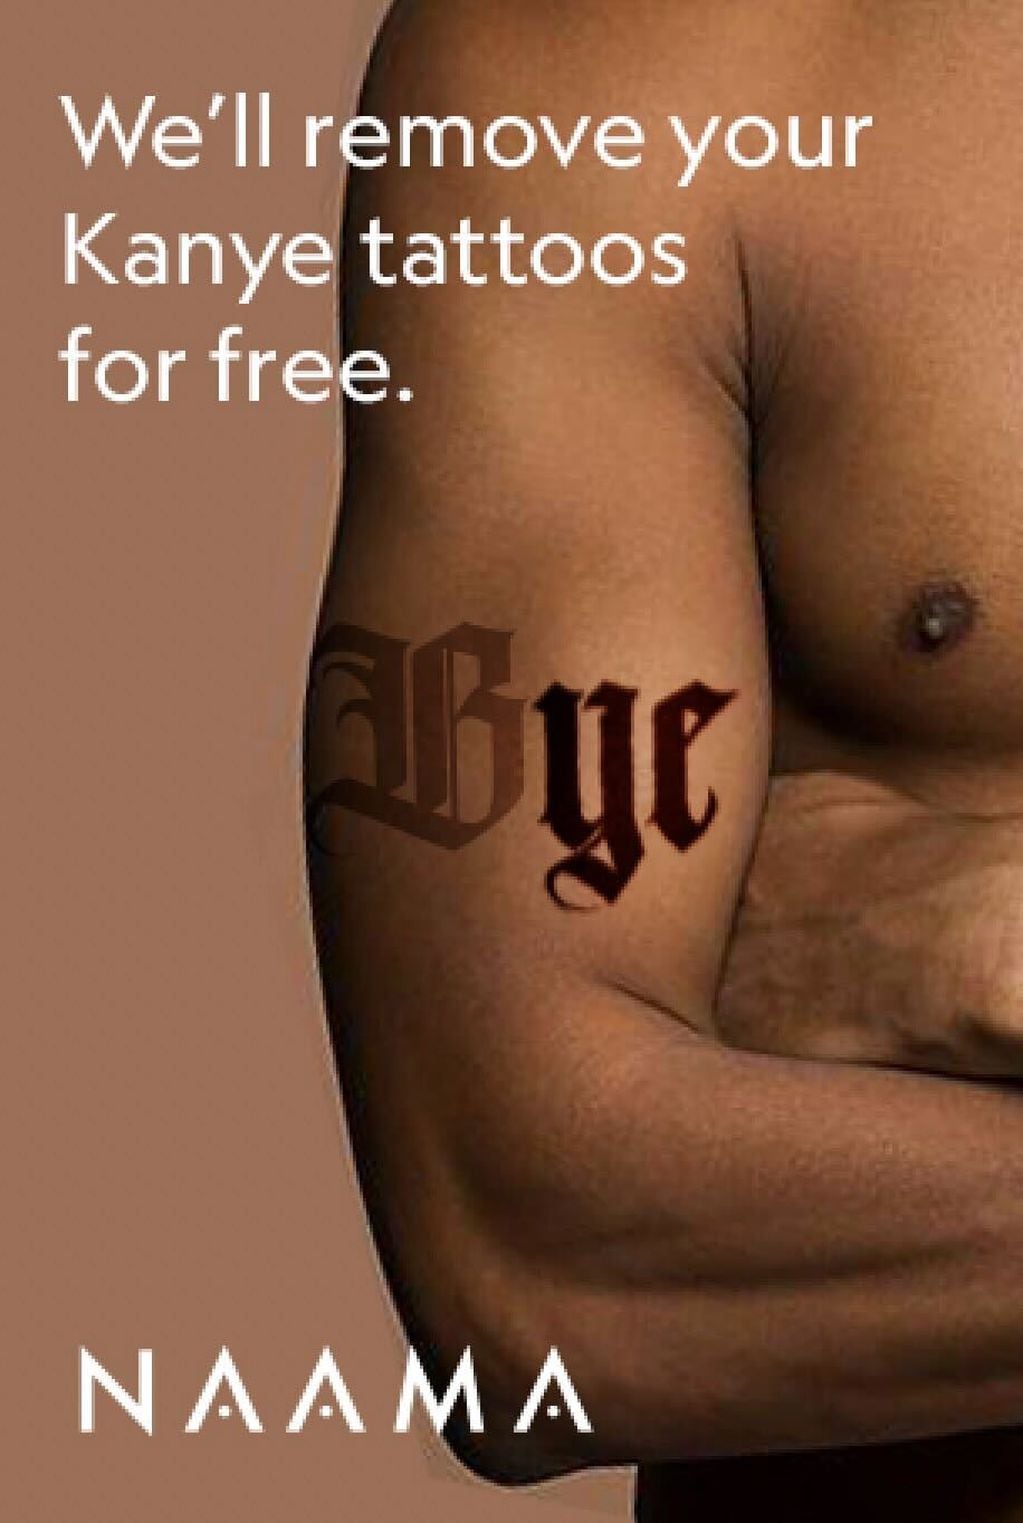 Un negocio de Londres ofrece borrar tatuajes de Kanye West gratis